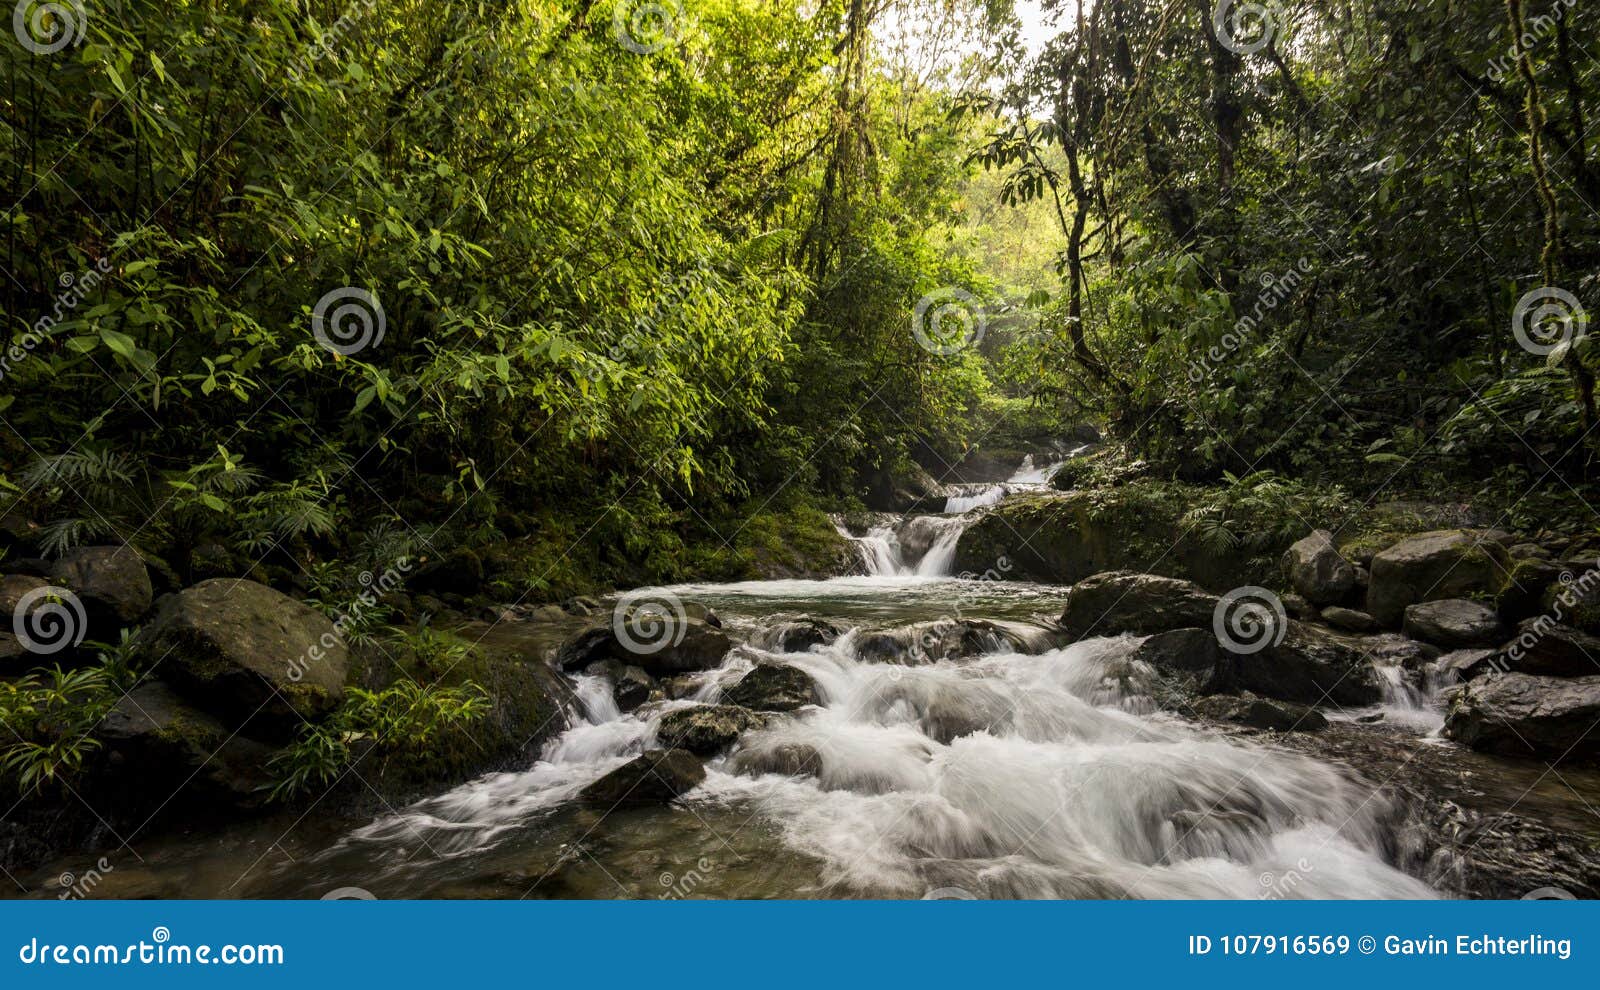 a waterfall, mountain river in chocÃÂ³ rainforest, colombia